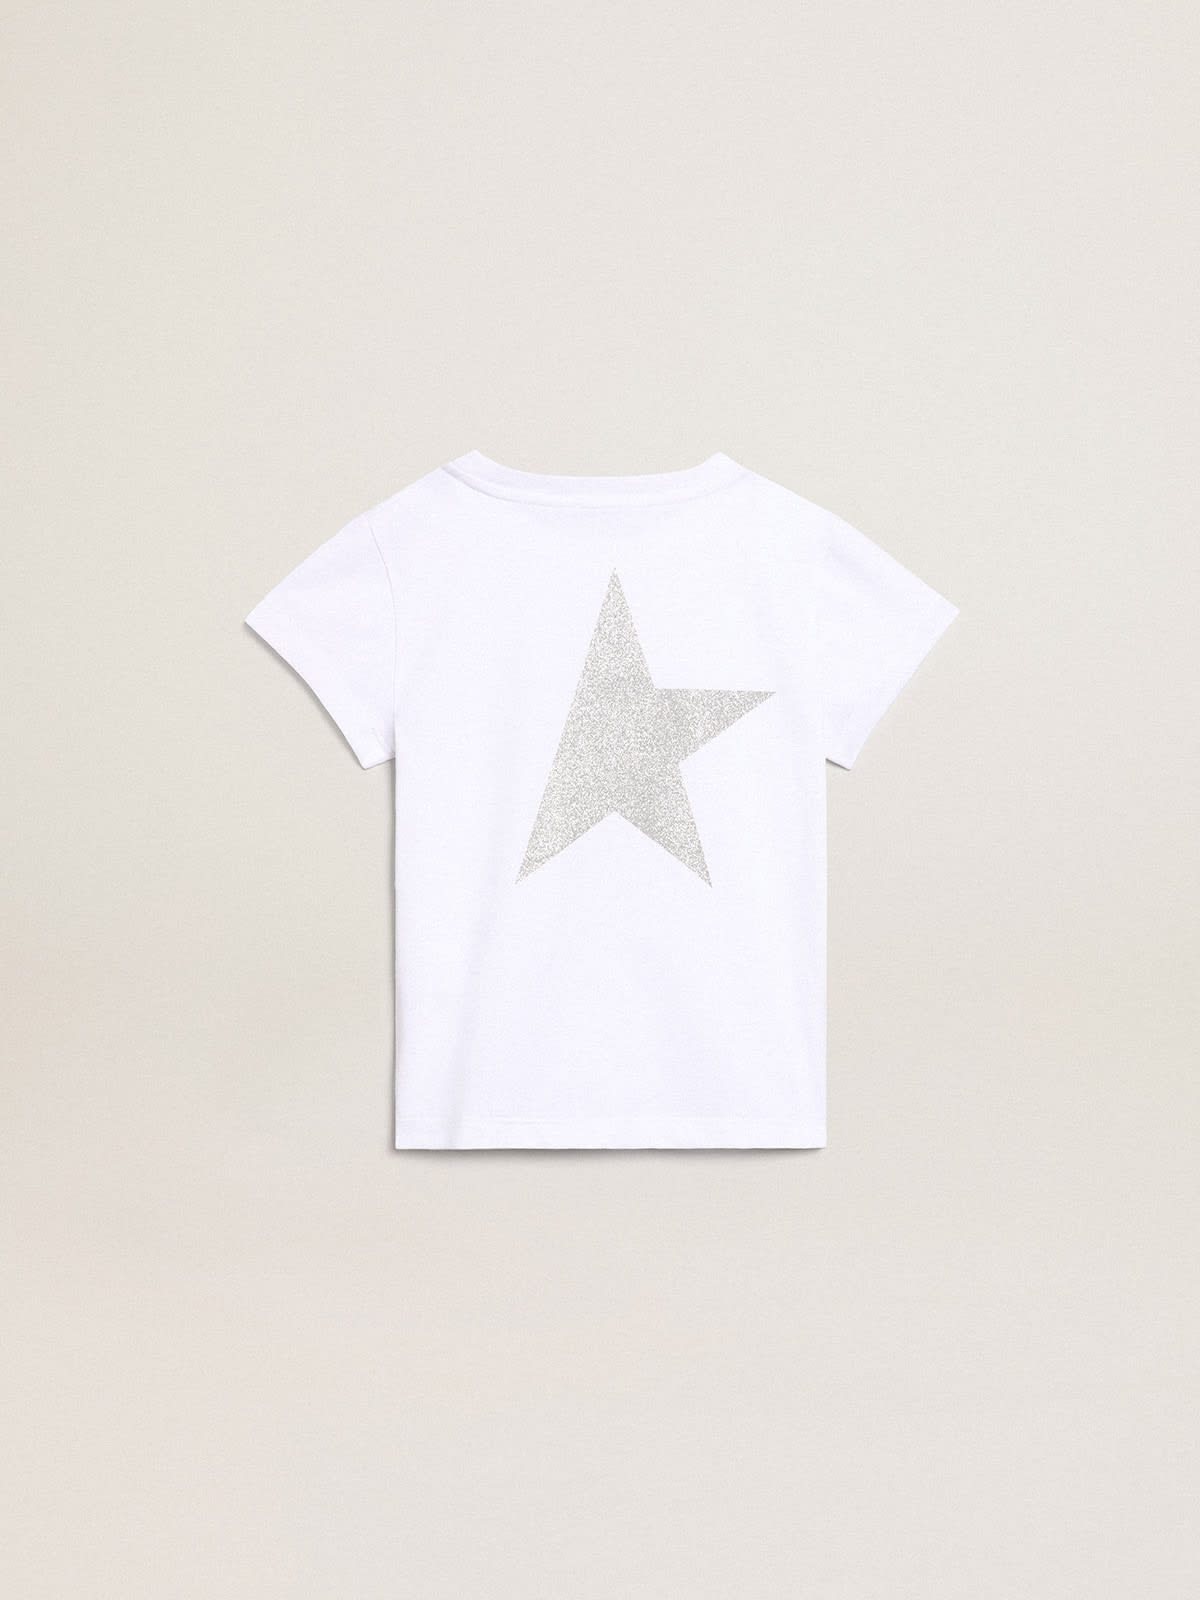 Golden Goose - T-shirt bianca e argento con logo e maxi stella in glitter argento in 